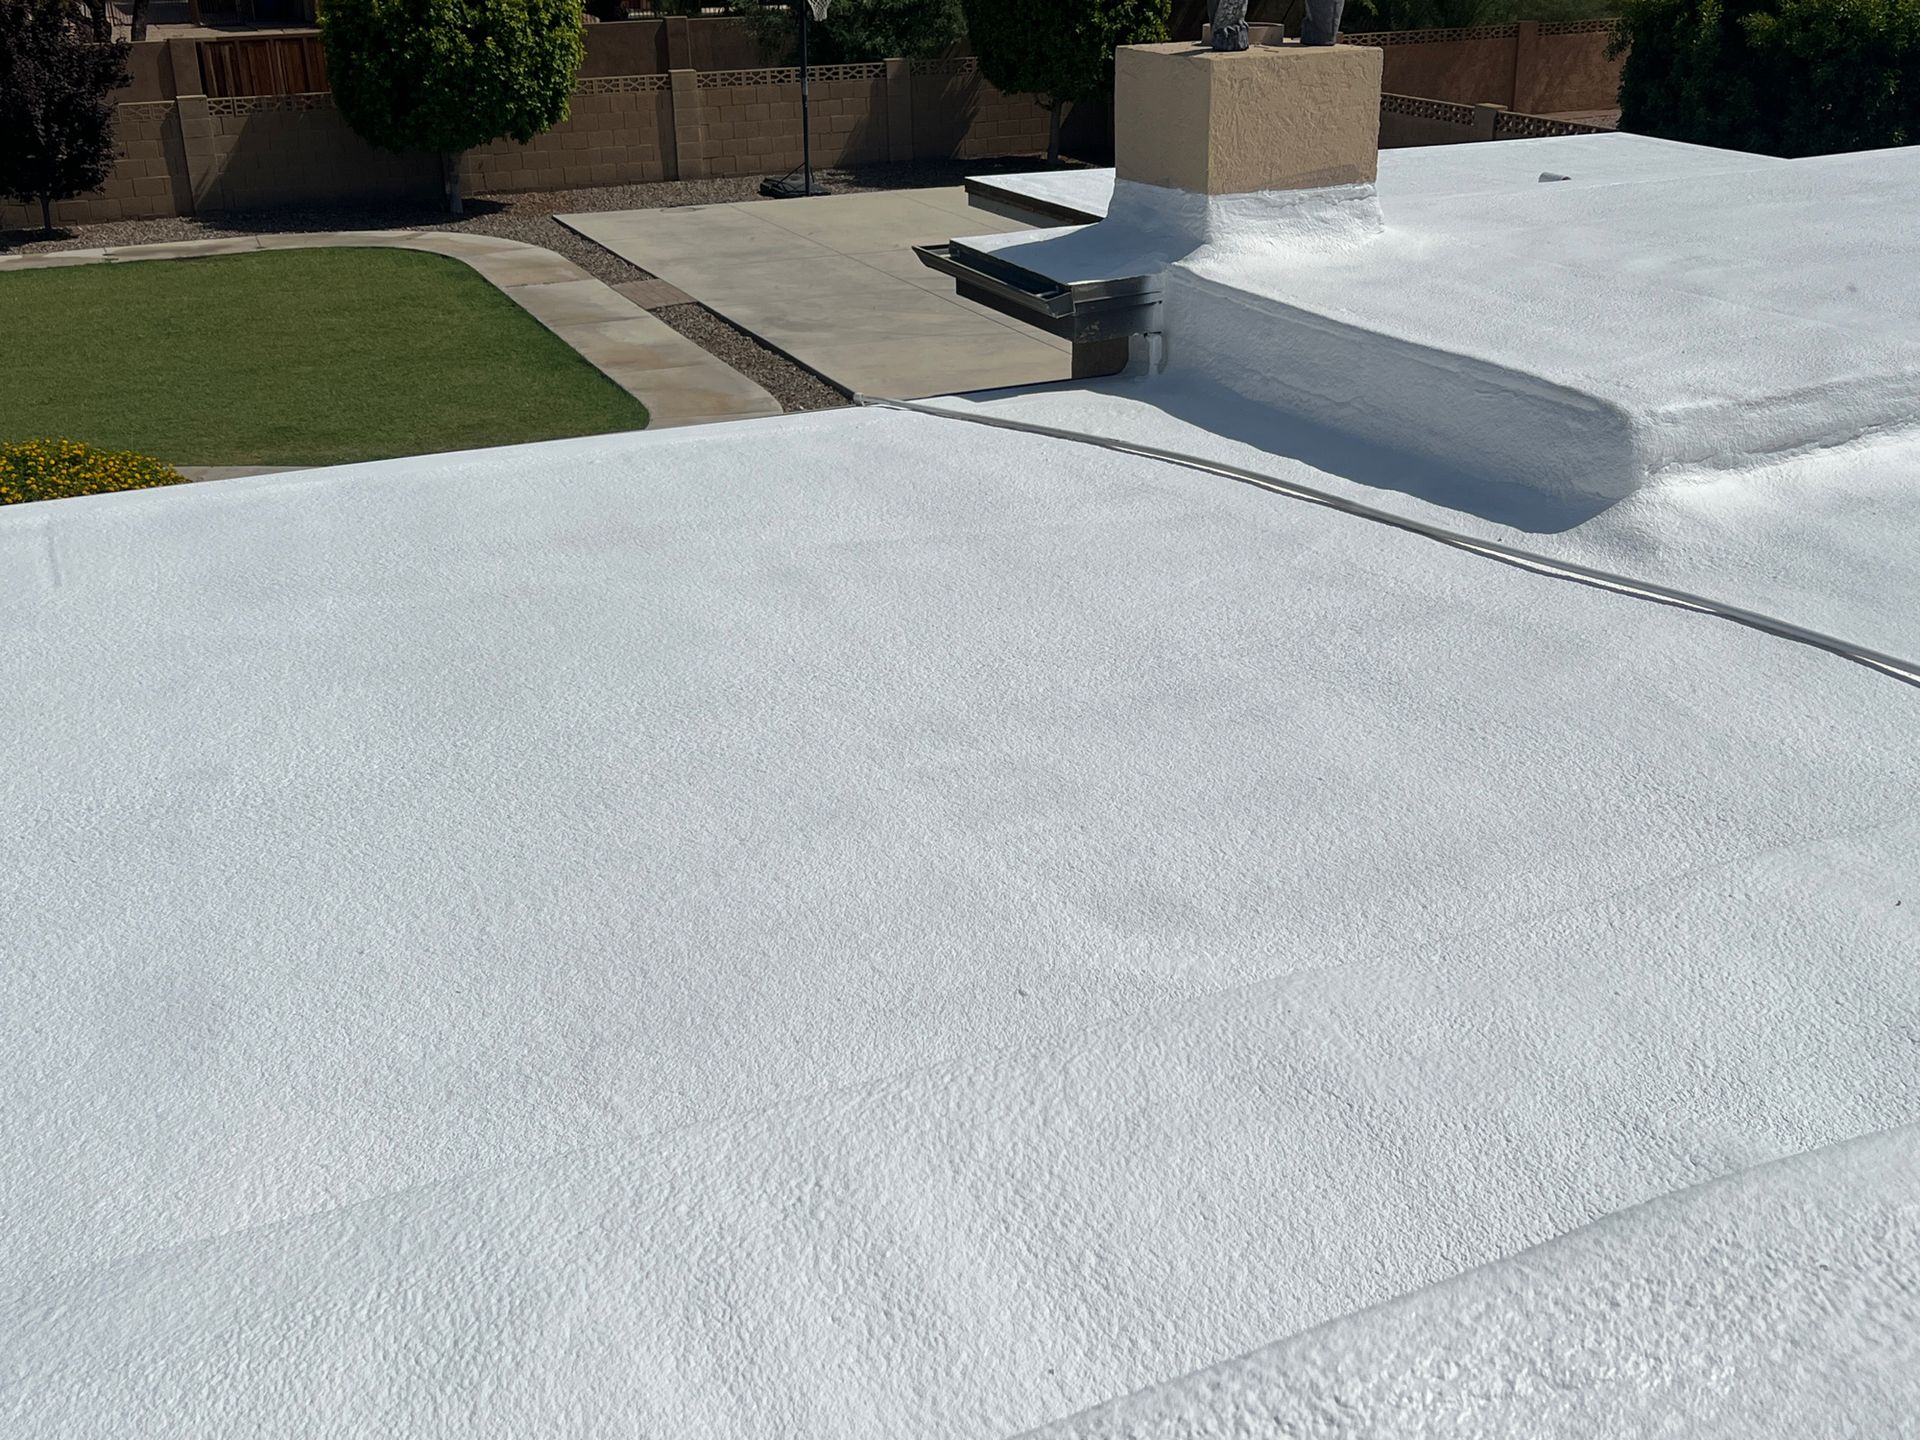 Maintaining My Foam Roof